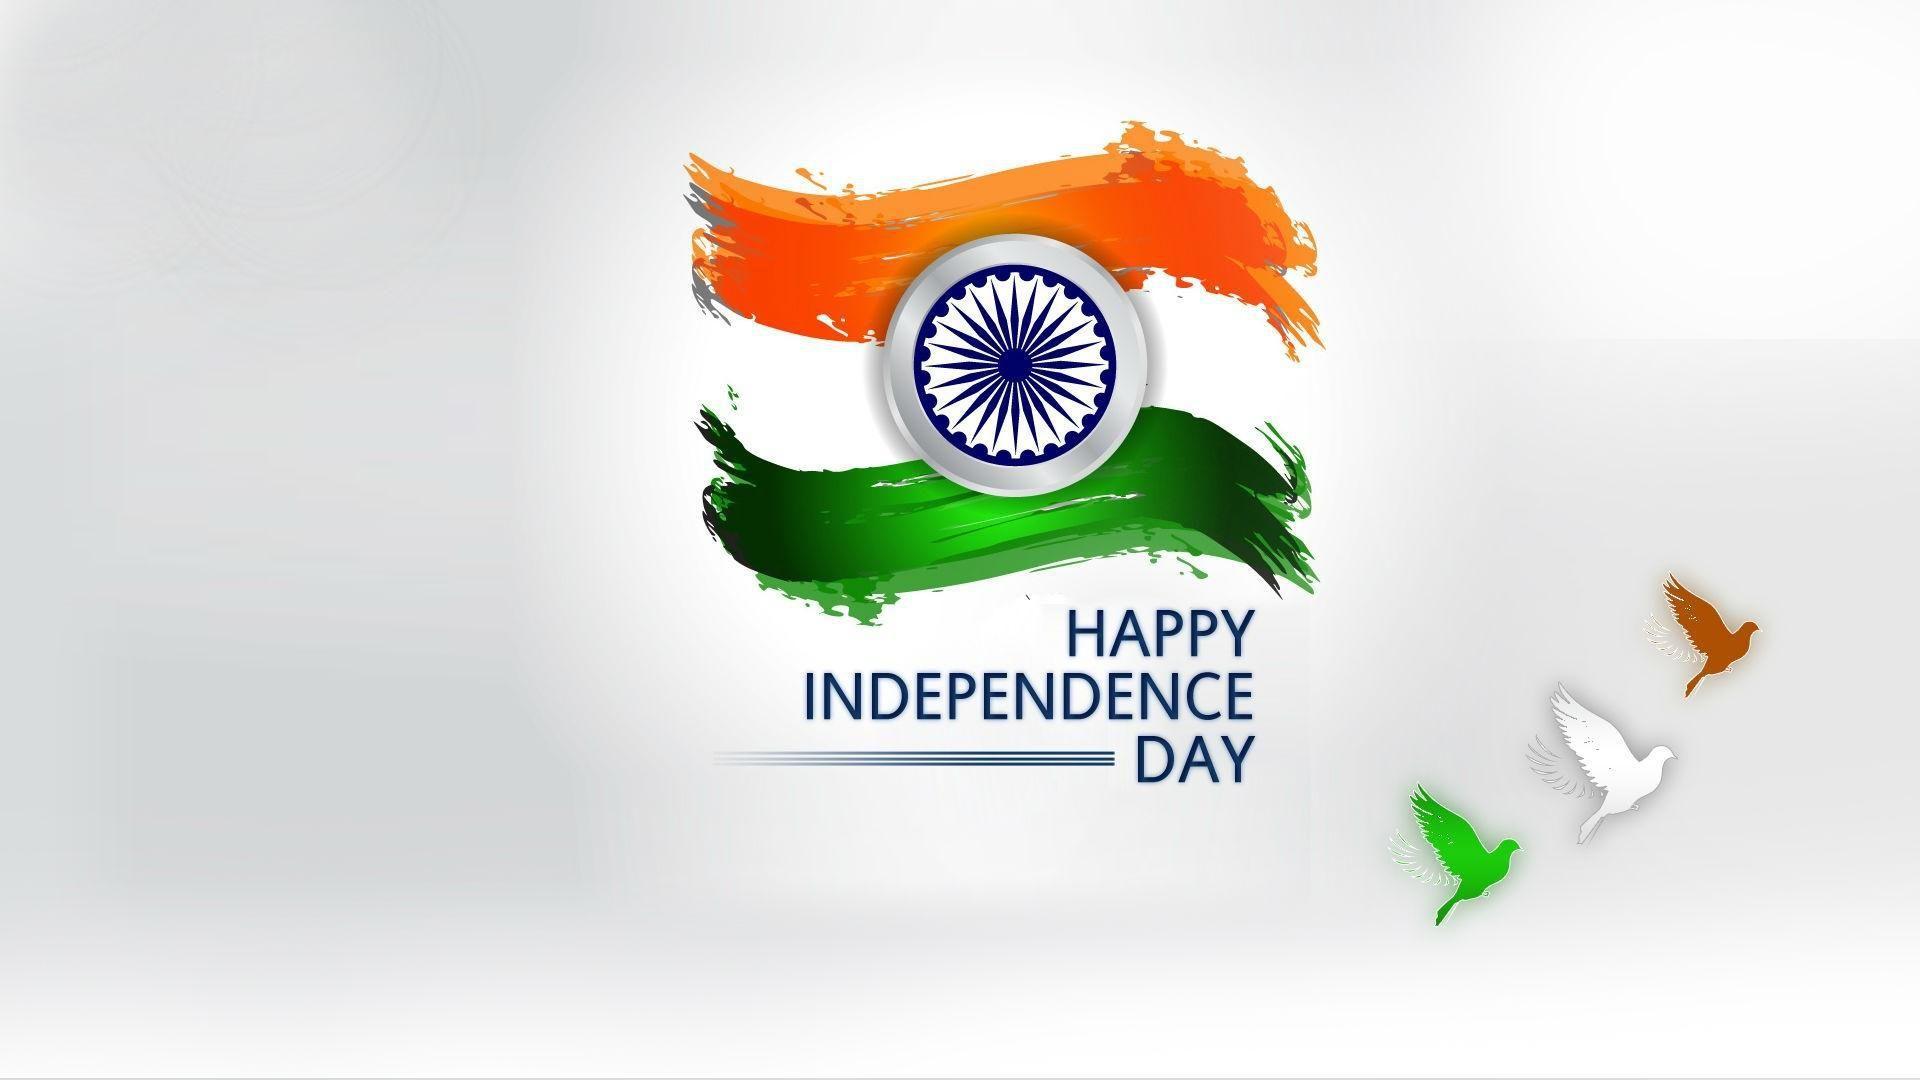 Happy Independence Day 2014 HD desktop wallpaper, Widescreen, High